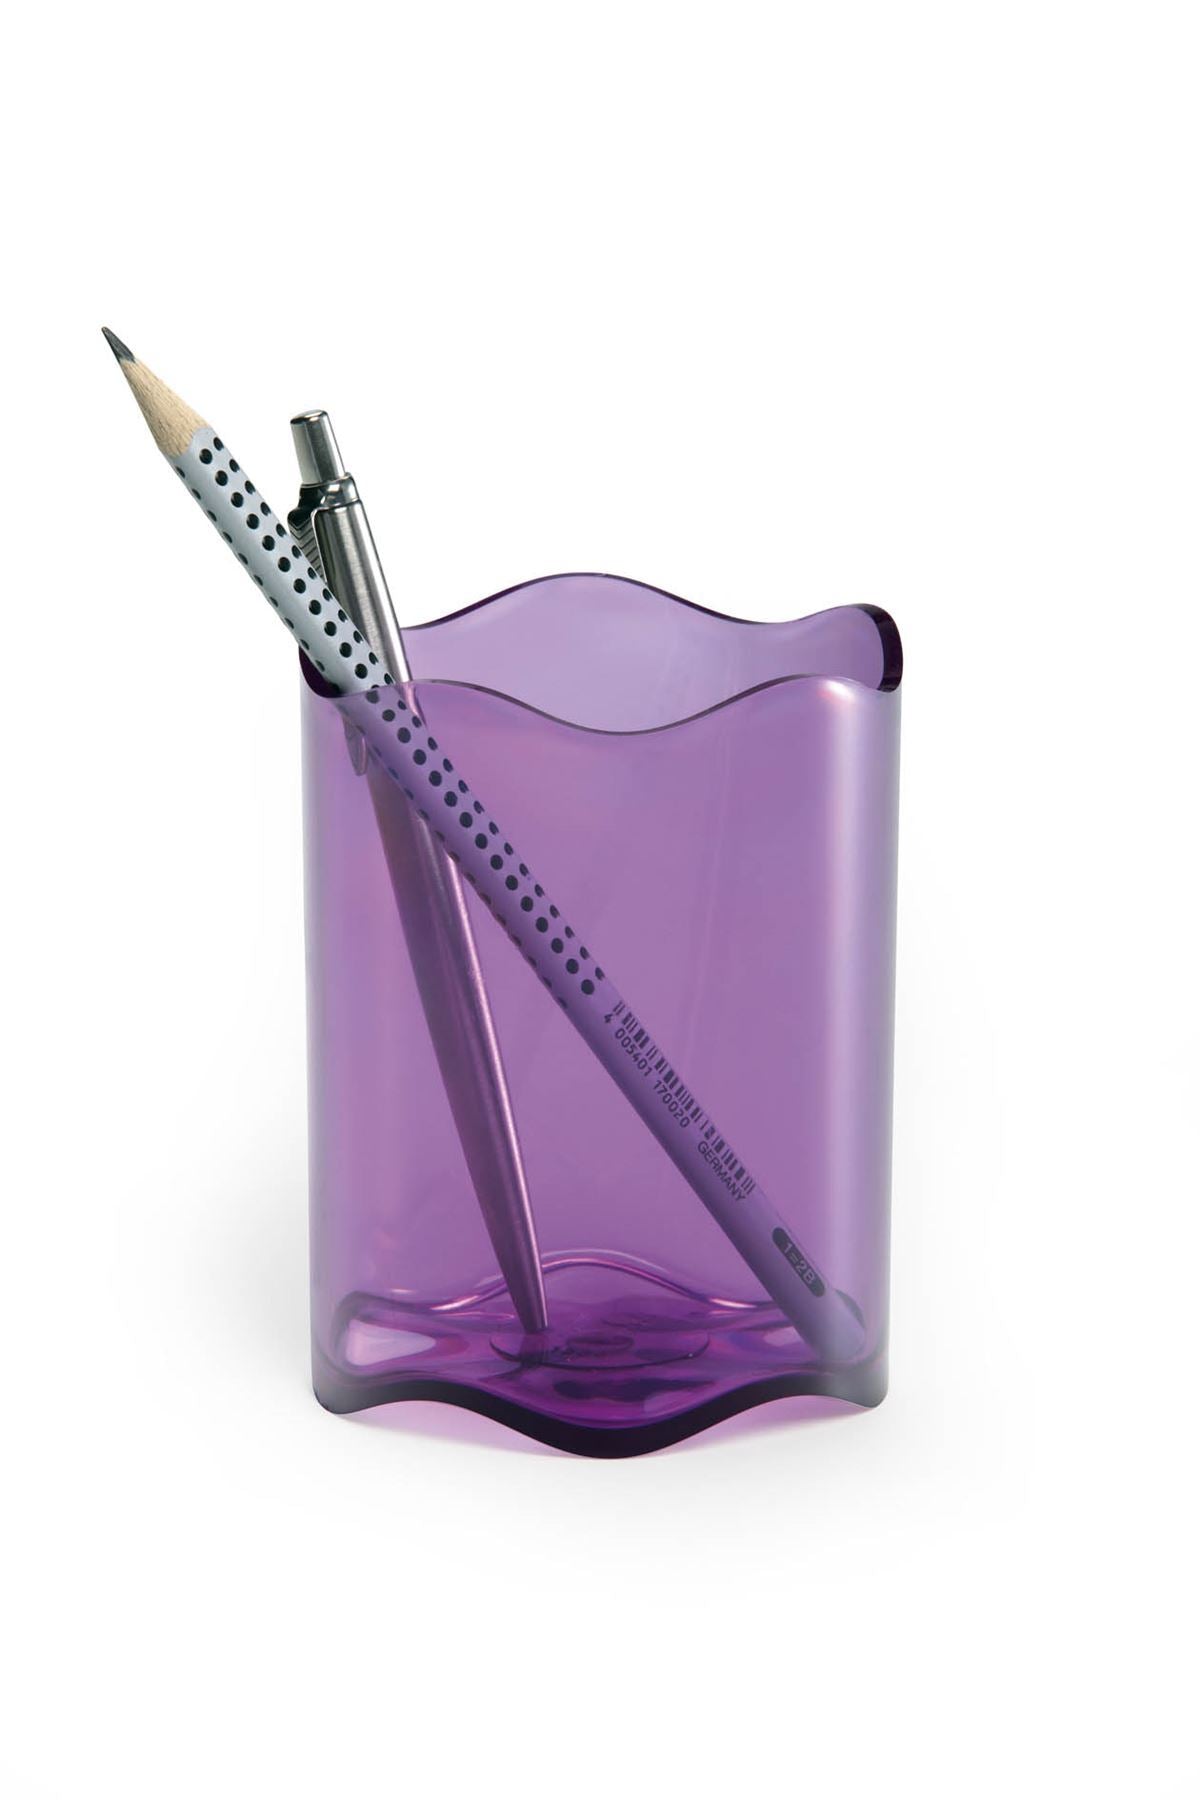 Durable TREND Pen Pot Pencil Holder Desk Tidy Organizer Cup | Clear Purple